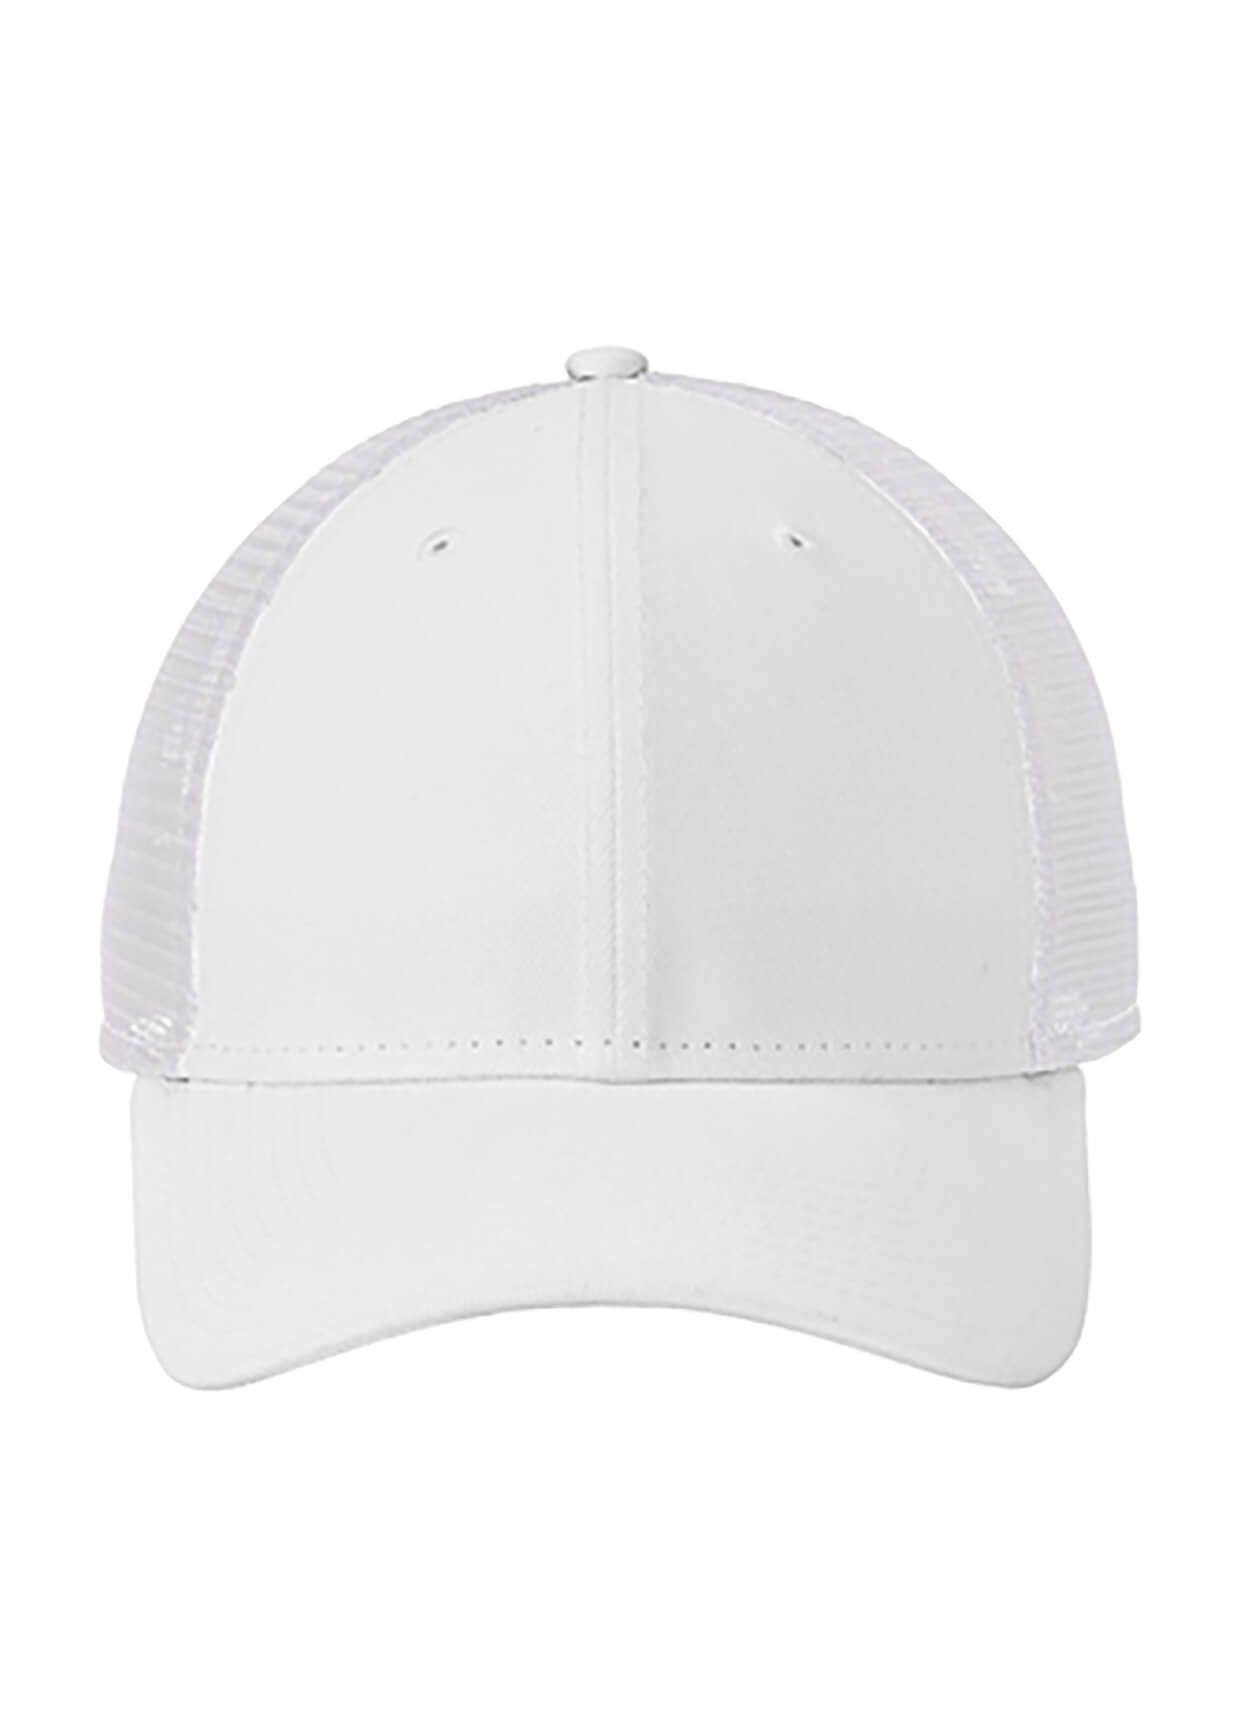 New Era White Recycled Snapback Cap